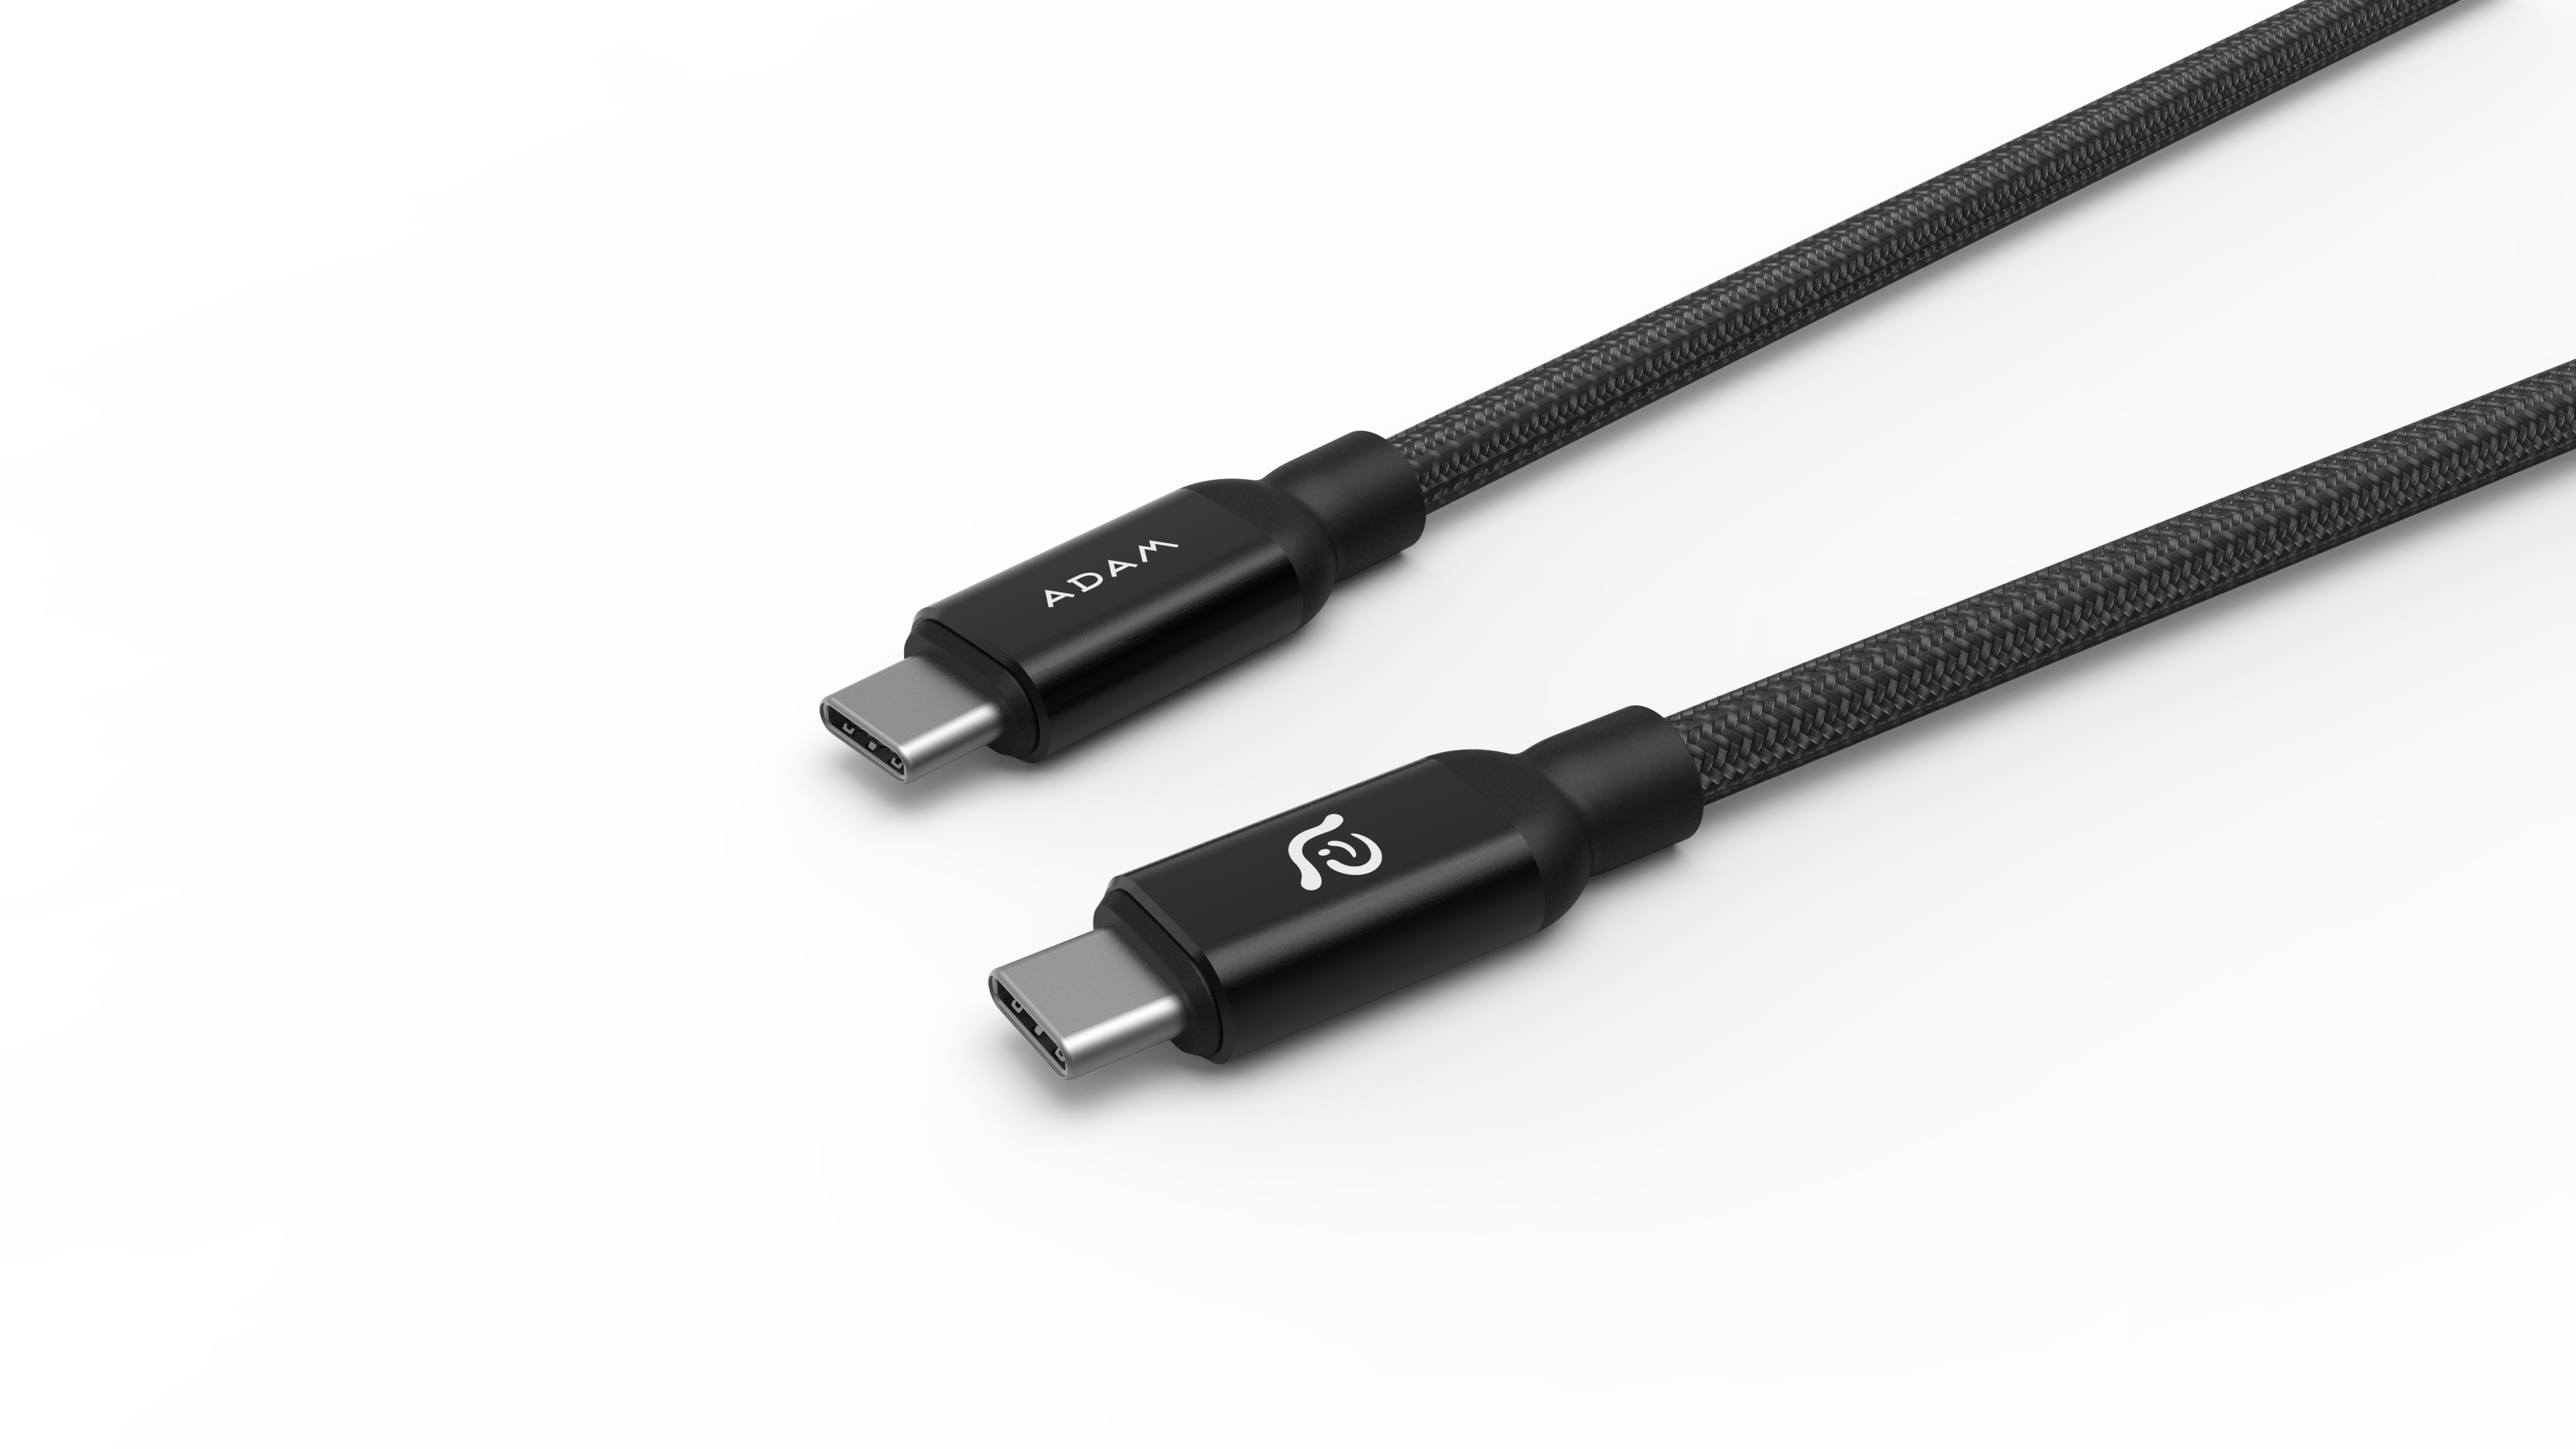 Usb c gen1. USB-C charge Cable (2m). Кабель Hiper (c200).